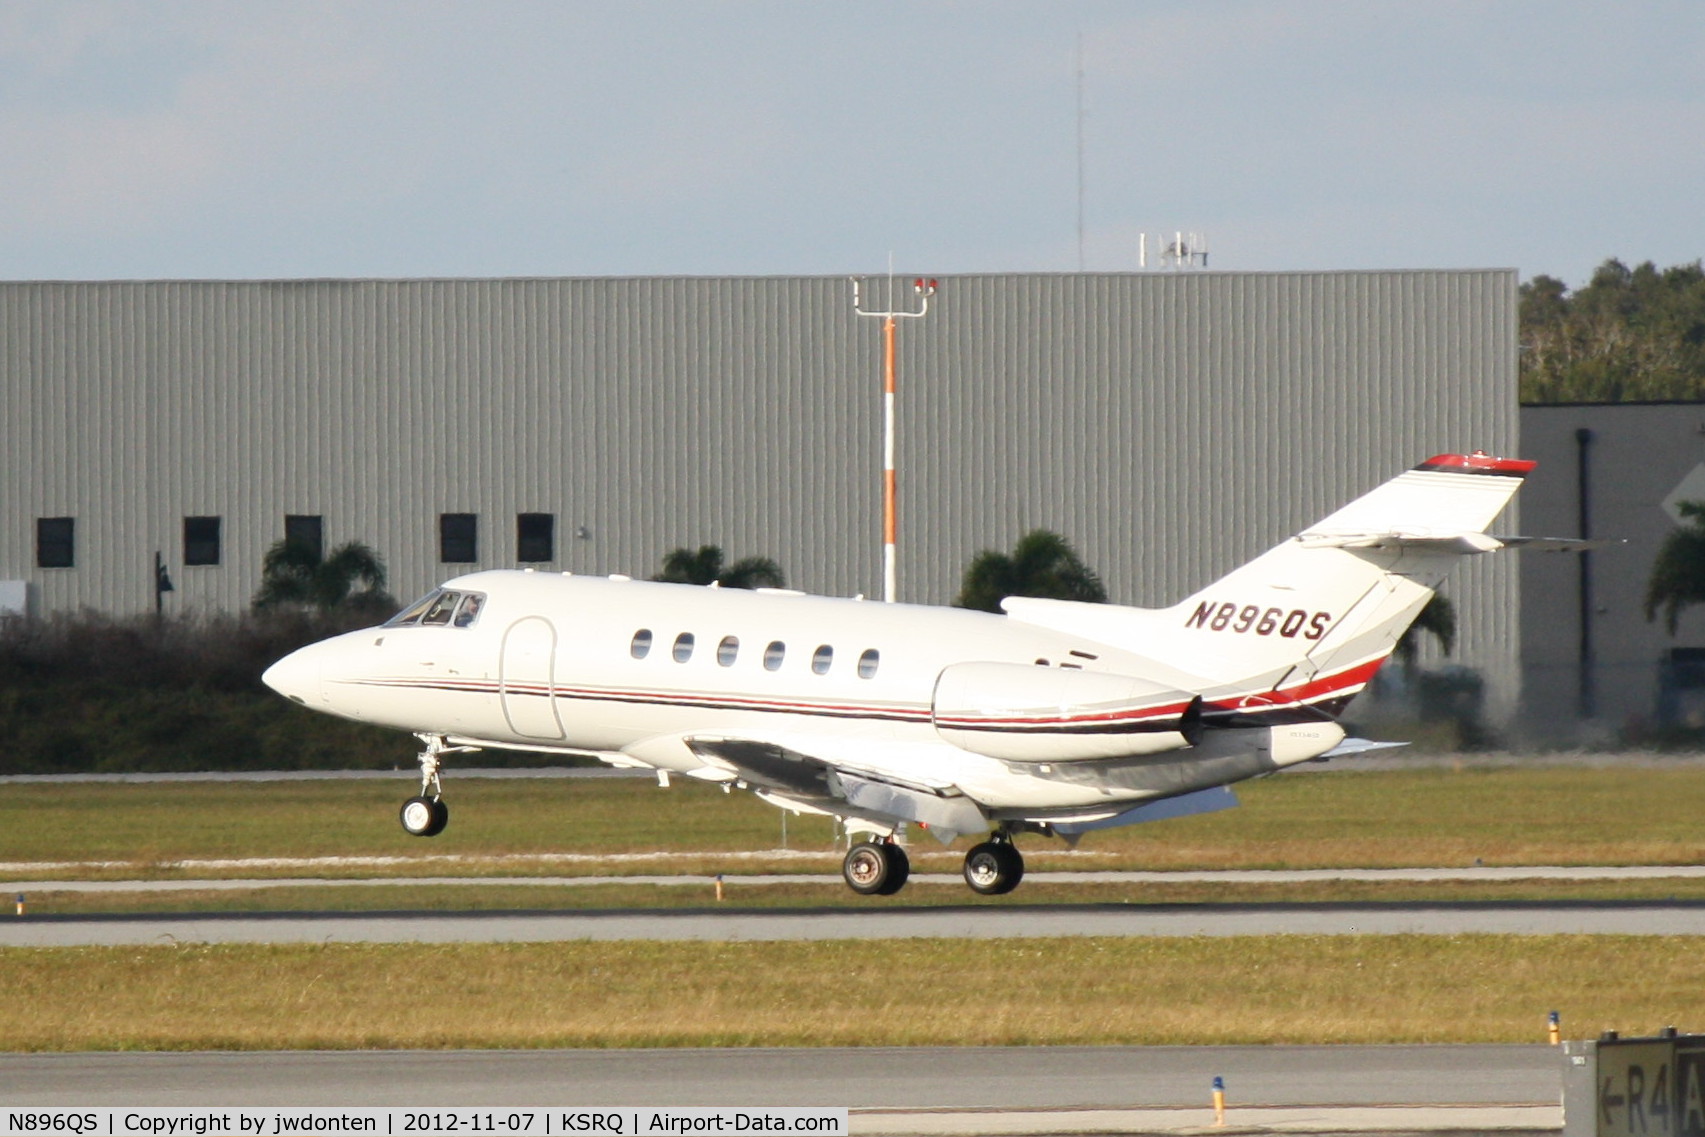 N896QS, 2003 Raytheon Hawker 800XP C/N 258640, Execjet Flight 896 (N896QS) arrives at Sarasota-Bradenton International Airport following a flight from Trenton-Mercer Airport